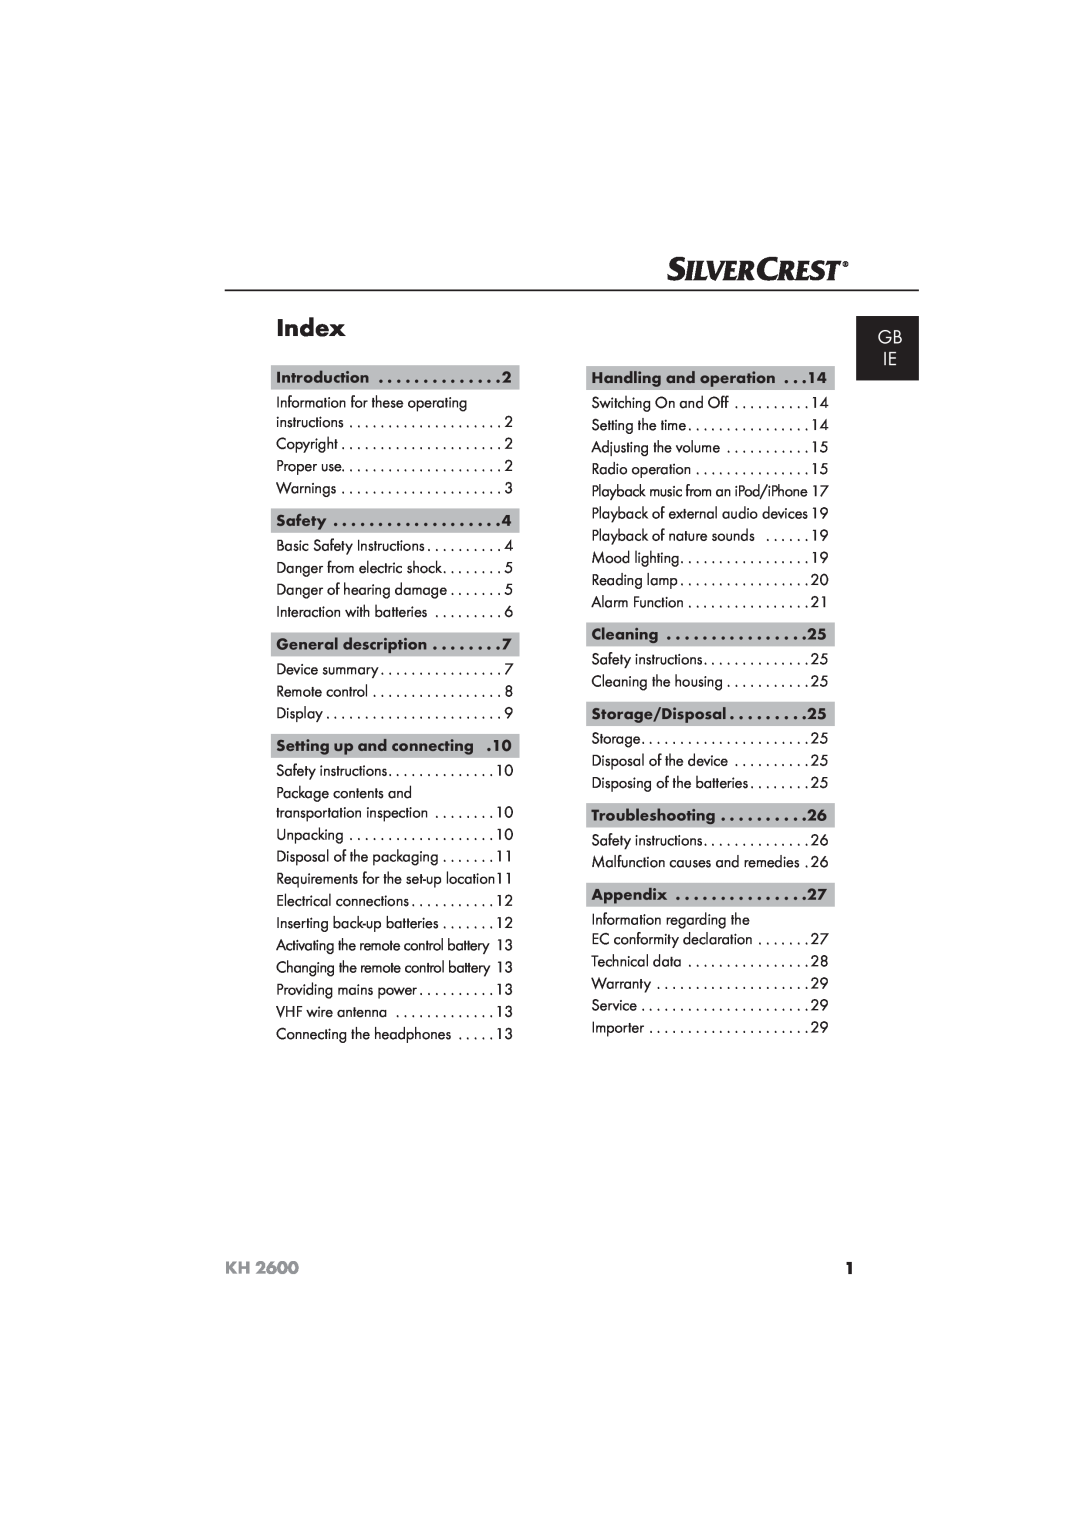 Silvercrest KH 2600 manual Index, Gb Ie 